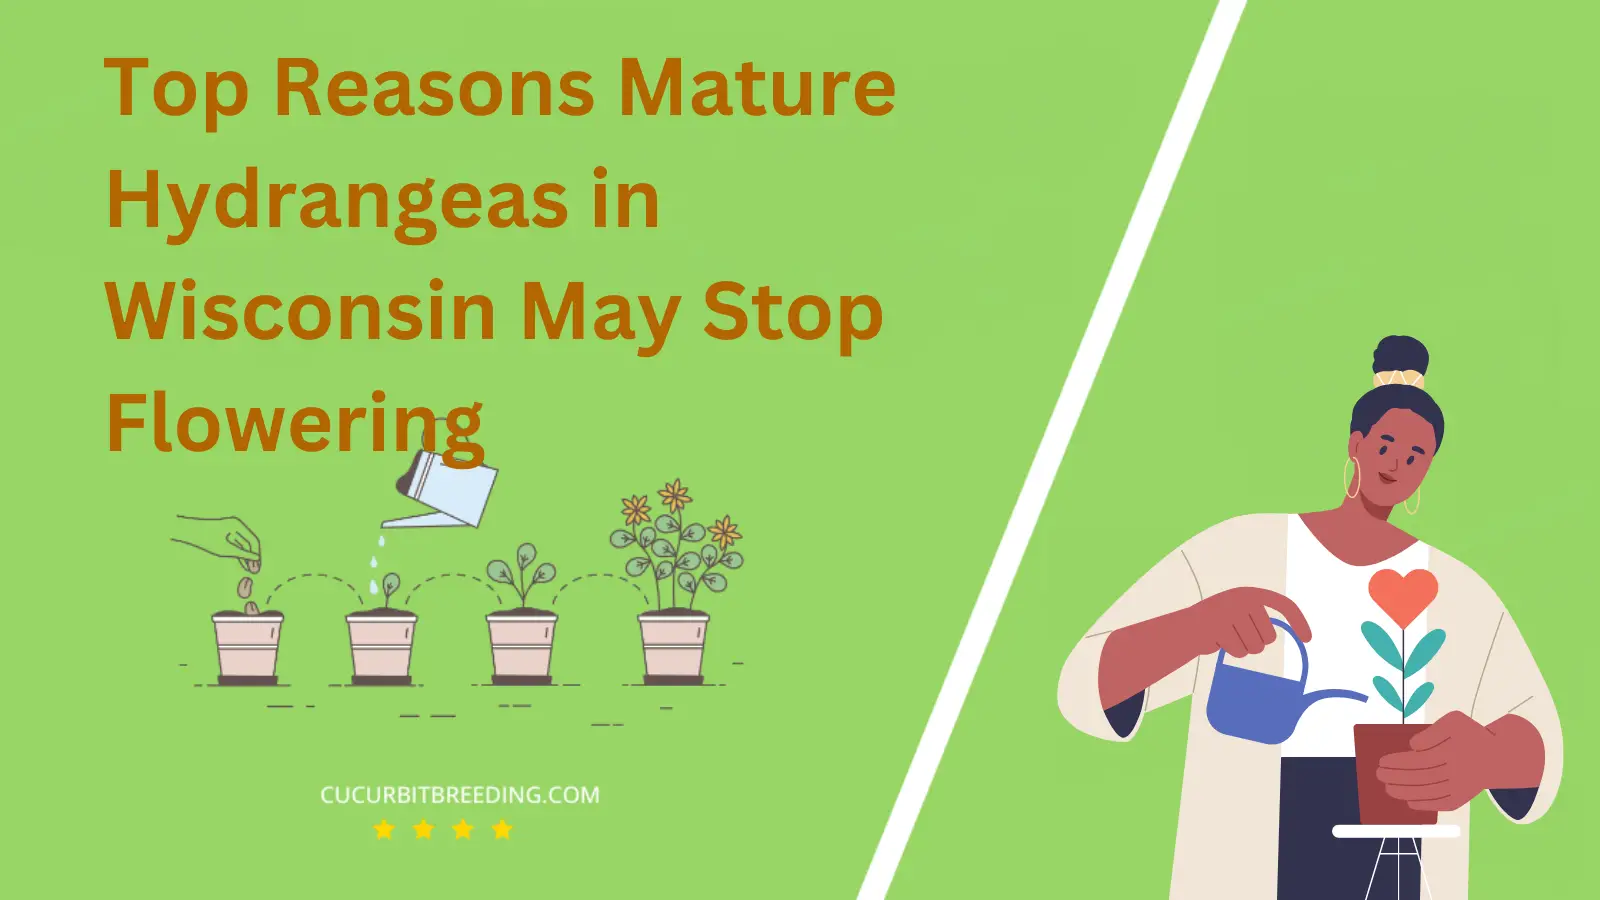 Top Reasons Mature Hydrangeas in Wisconsin May Stop Flowering